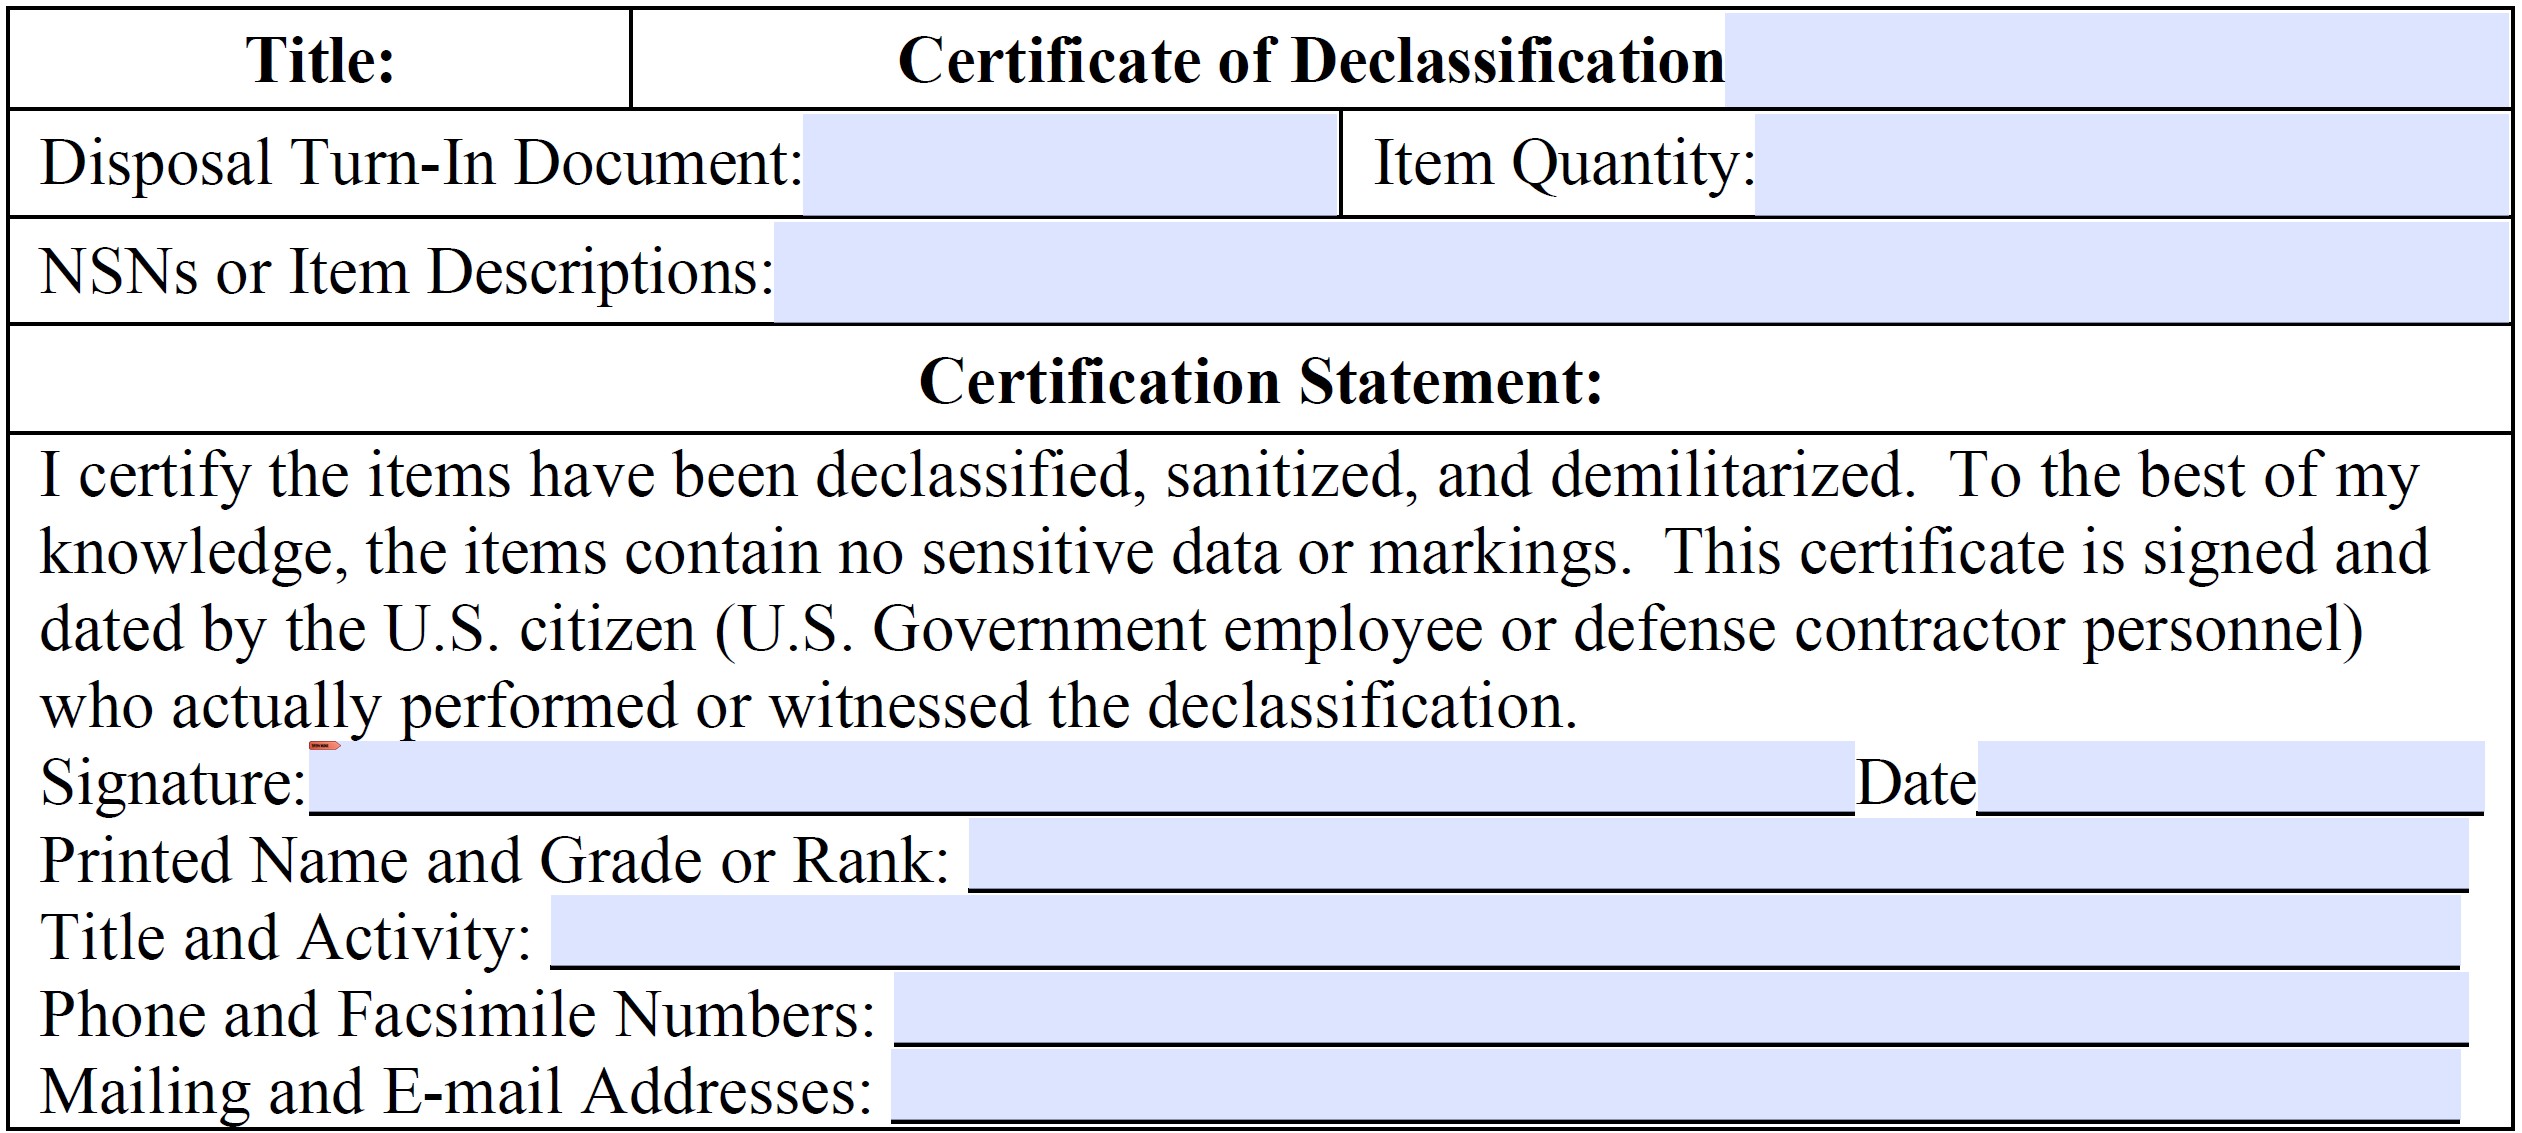 Drain and Purge Certificate